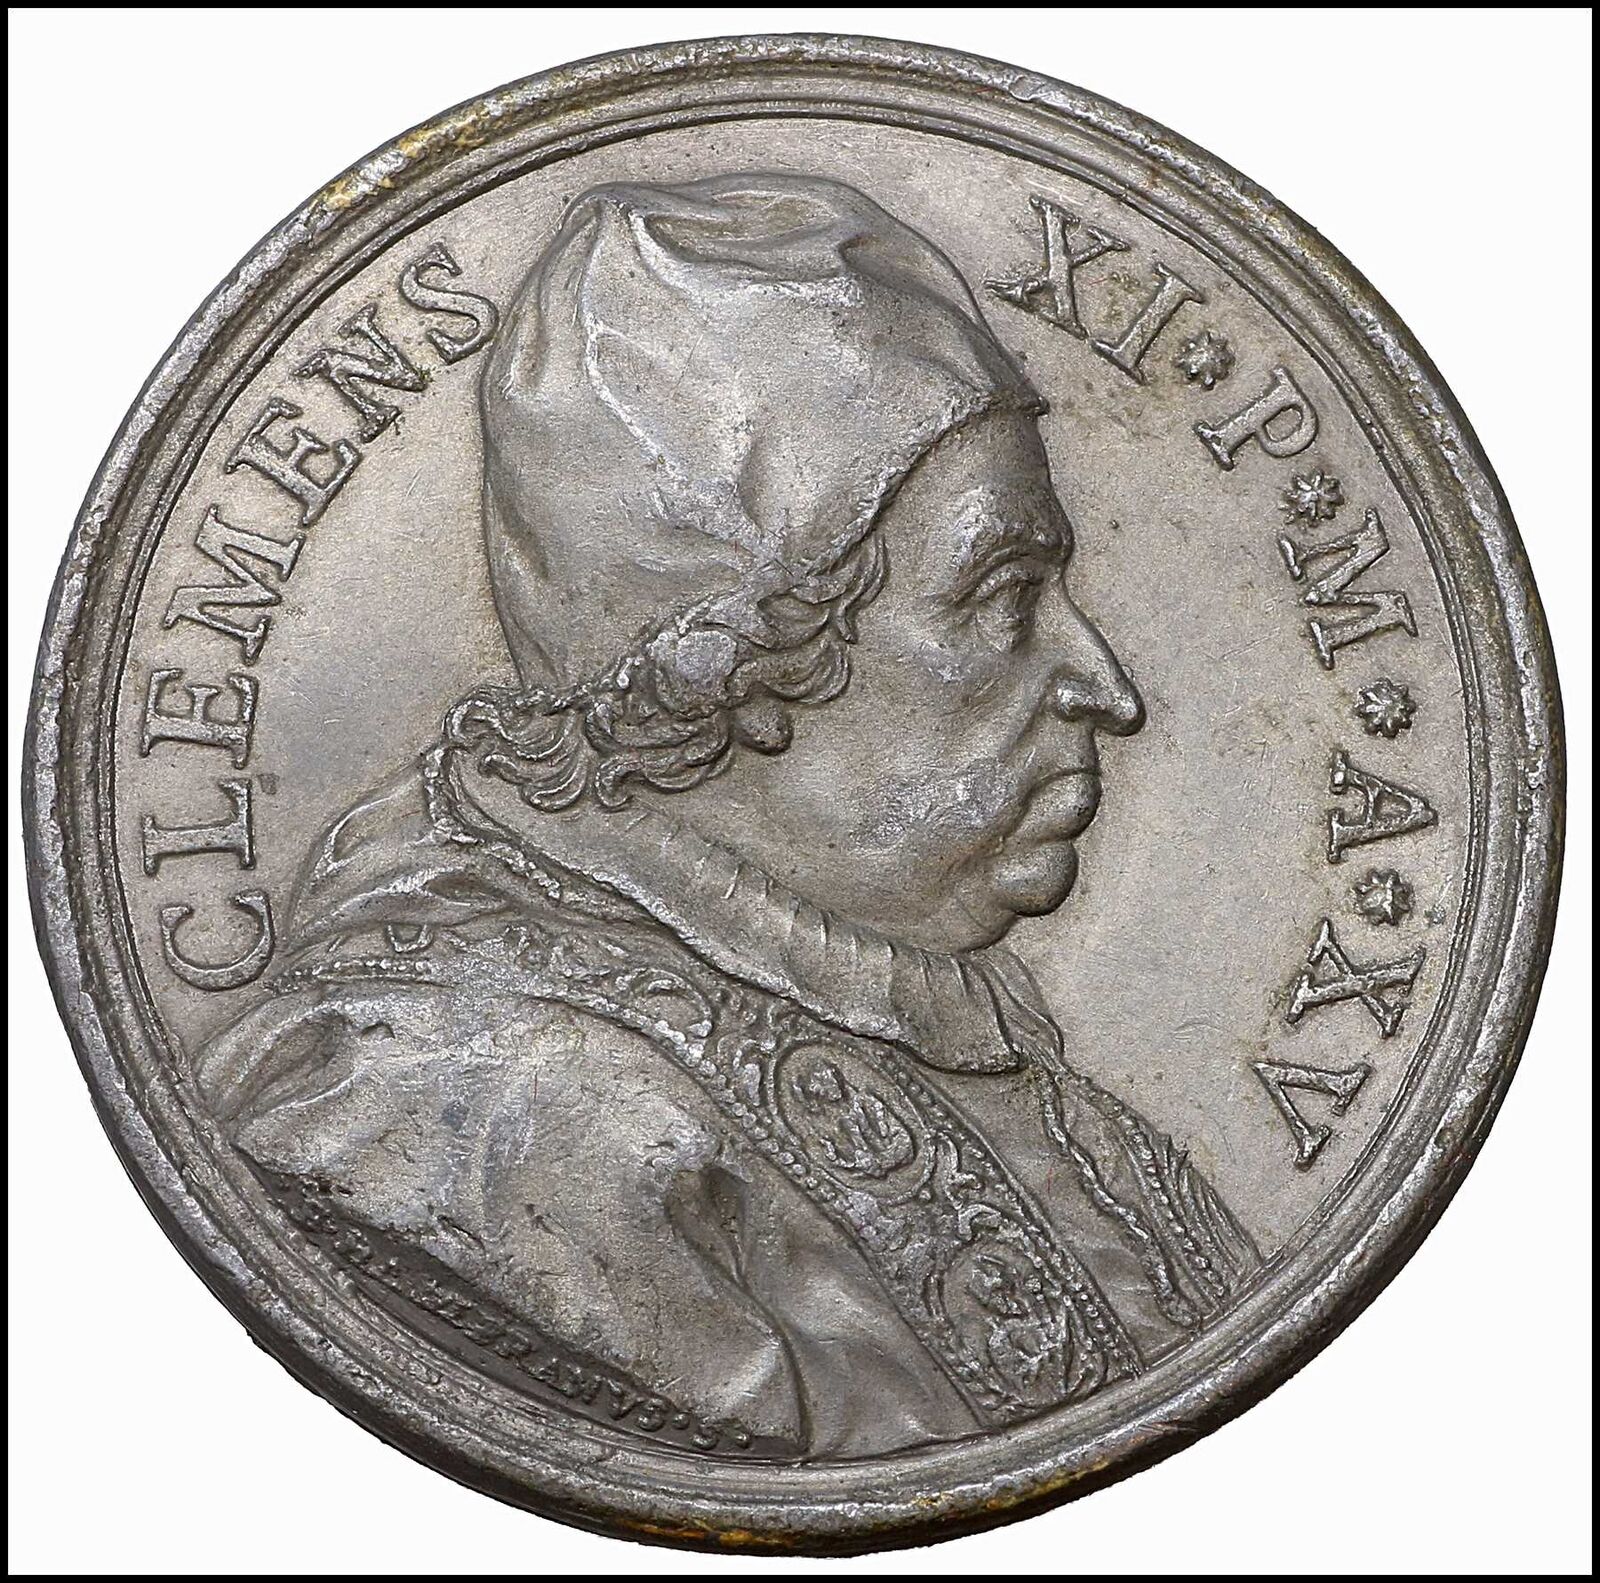 Pope Clement XI medal 1714 R3 Rare Medal High Grade Vatican Saint church